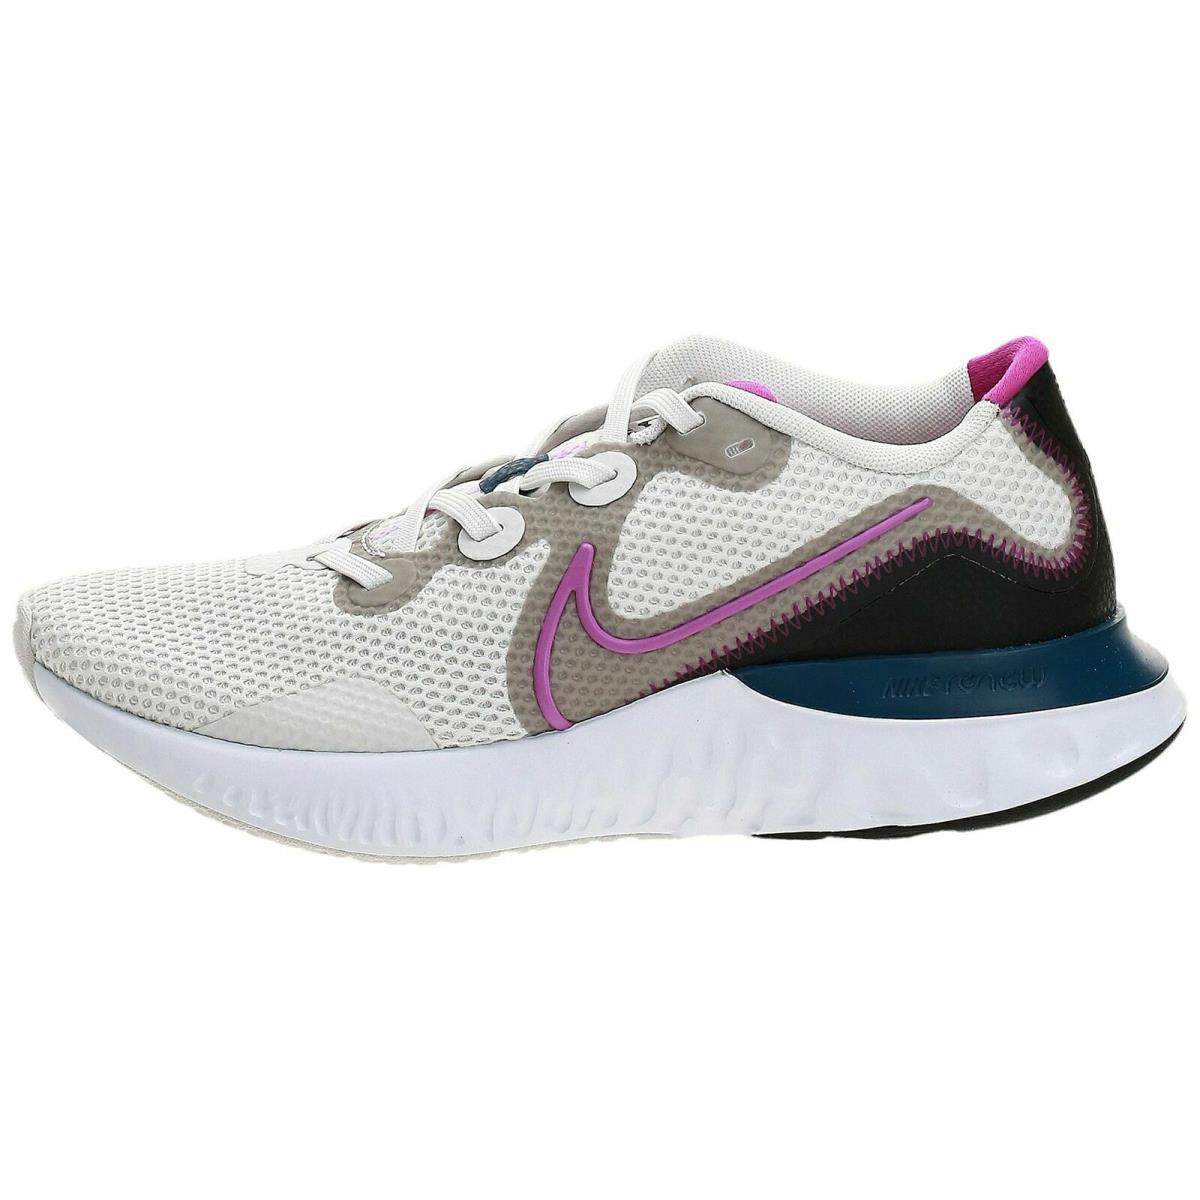 Nike Renew Run Women`s Trainers Size 6 Platinum Purple Black CK6360 002 - White